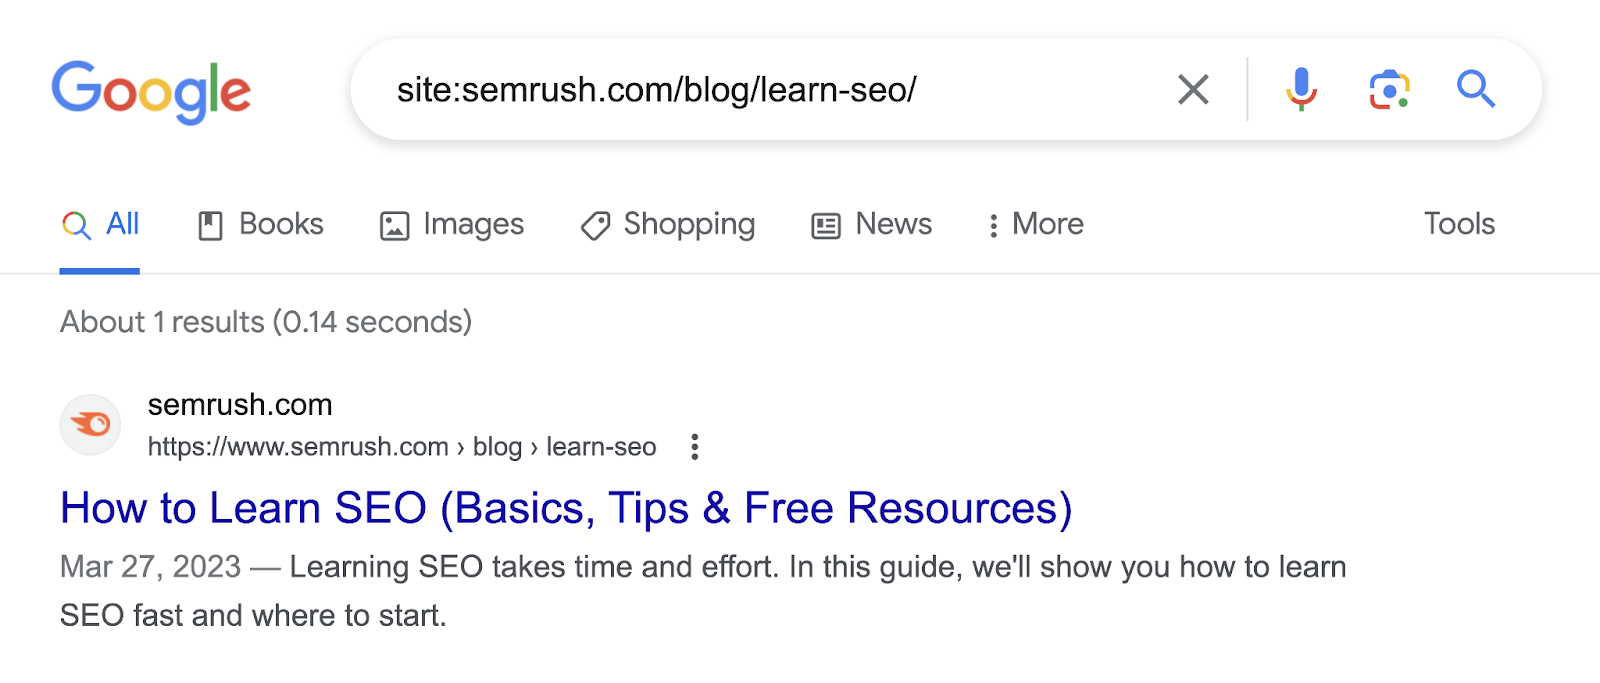 search for “site:semrush.com/blog/learn-seo/”